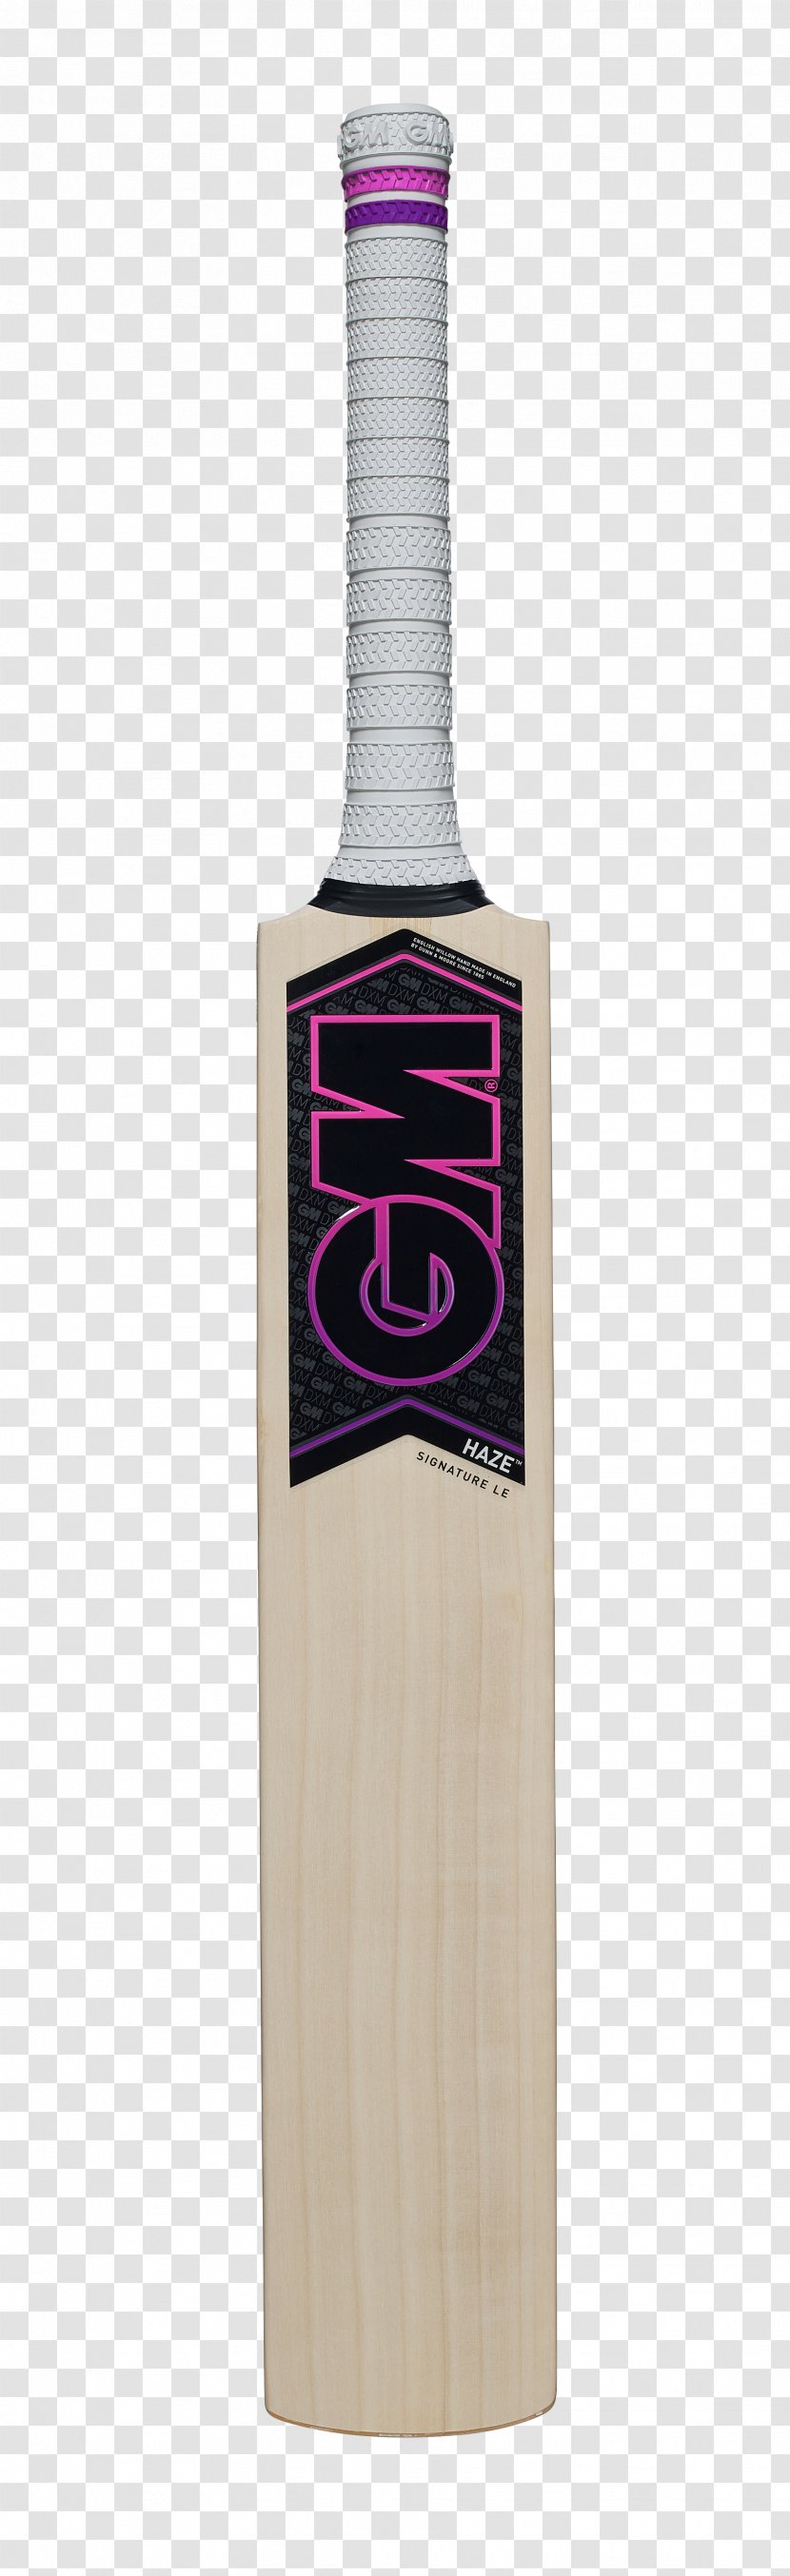 Cricket Bats Batting Gunn & Moore England - Dextromethorphan Transparent PNG